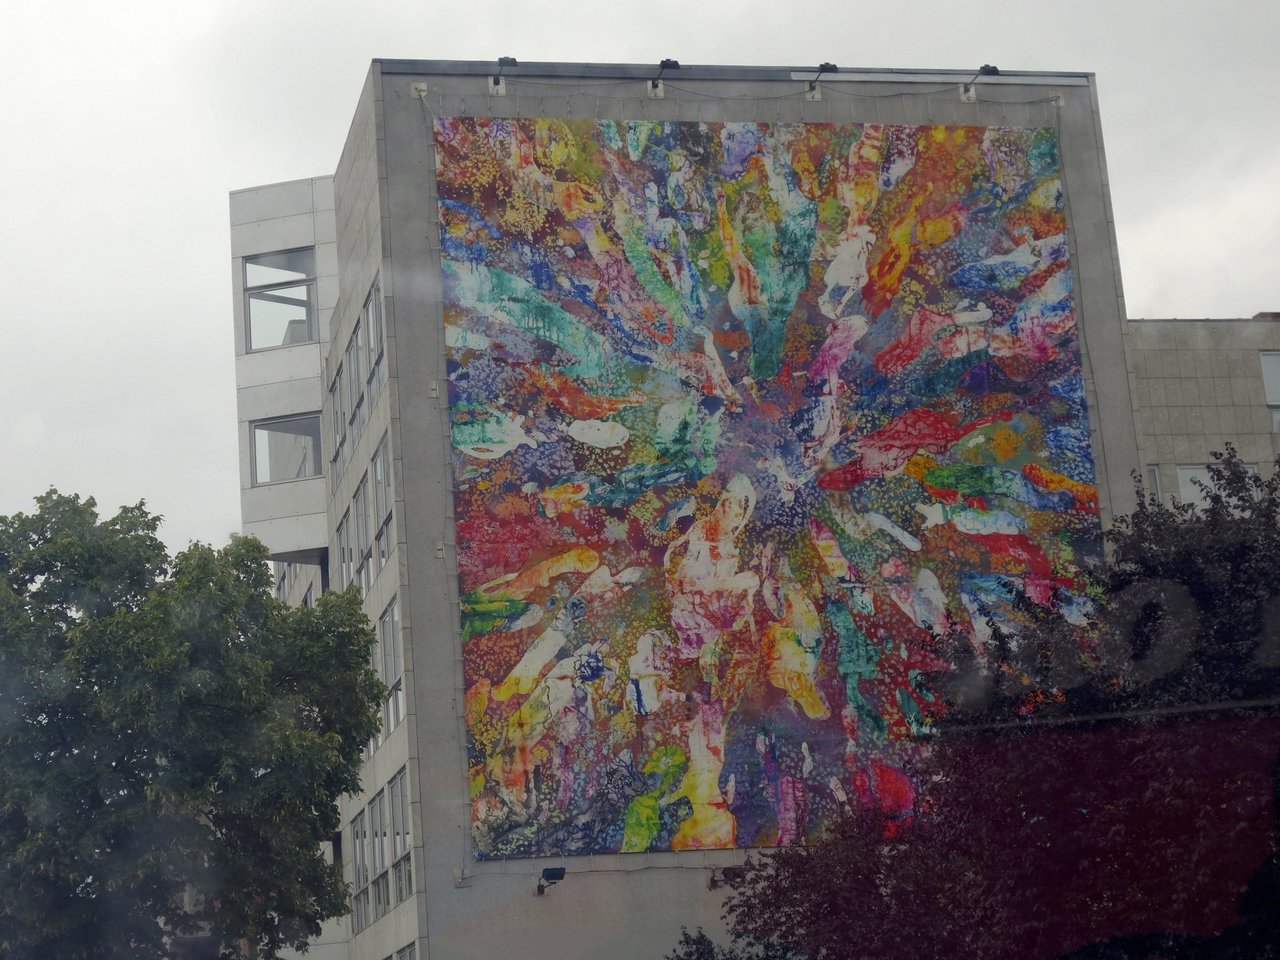 #art #streetart incredible building in #Berlin #travel https://t.co/X0PvcPysPc